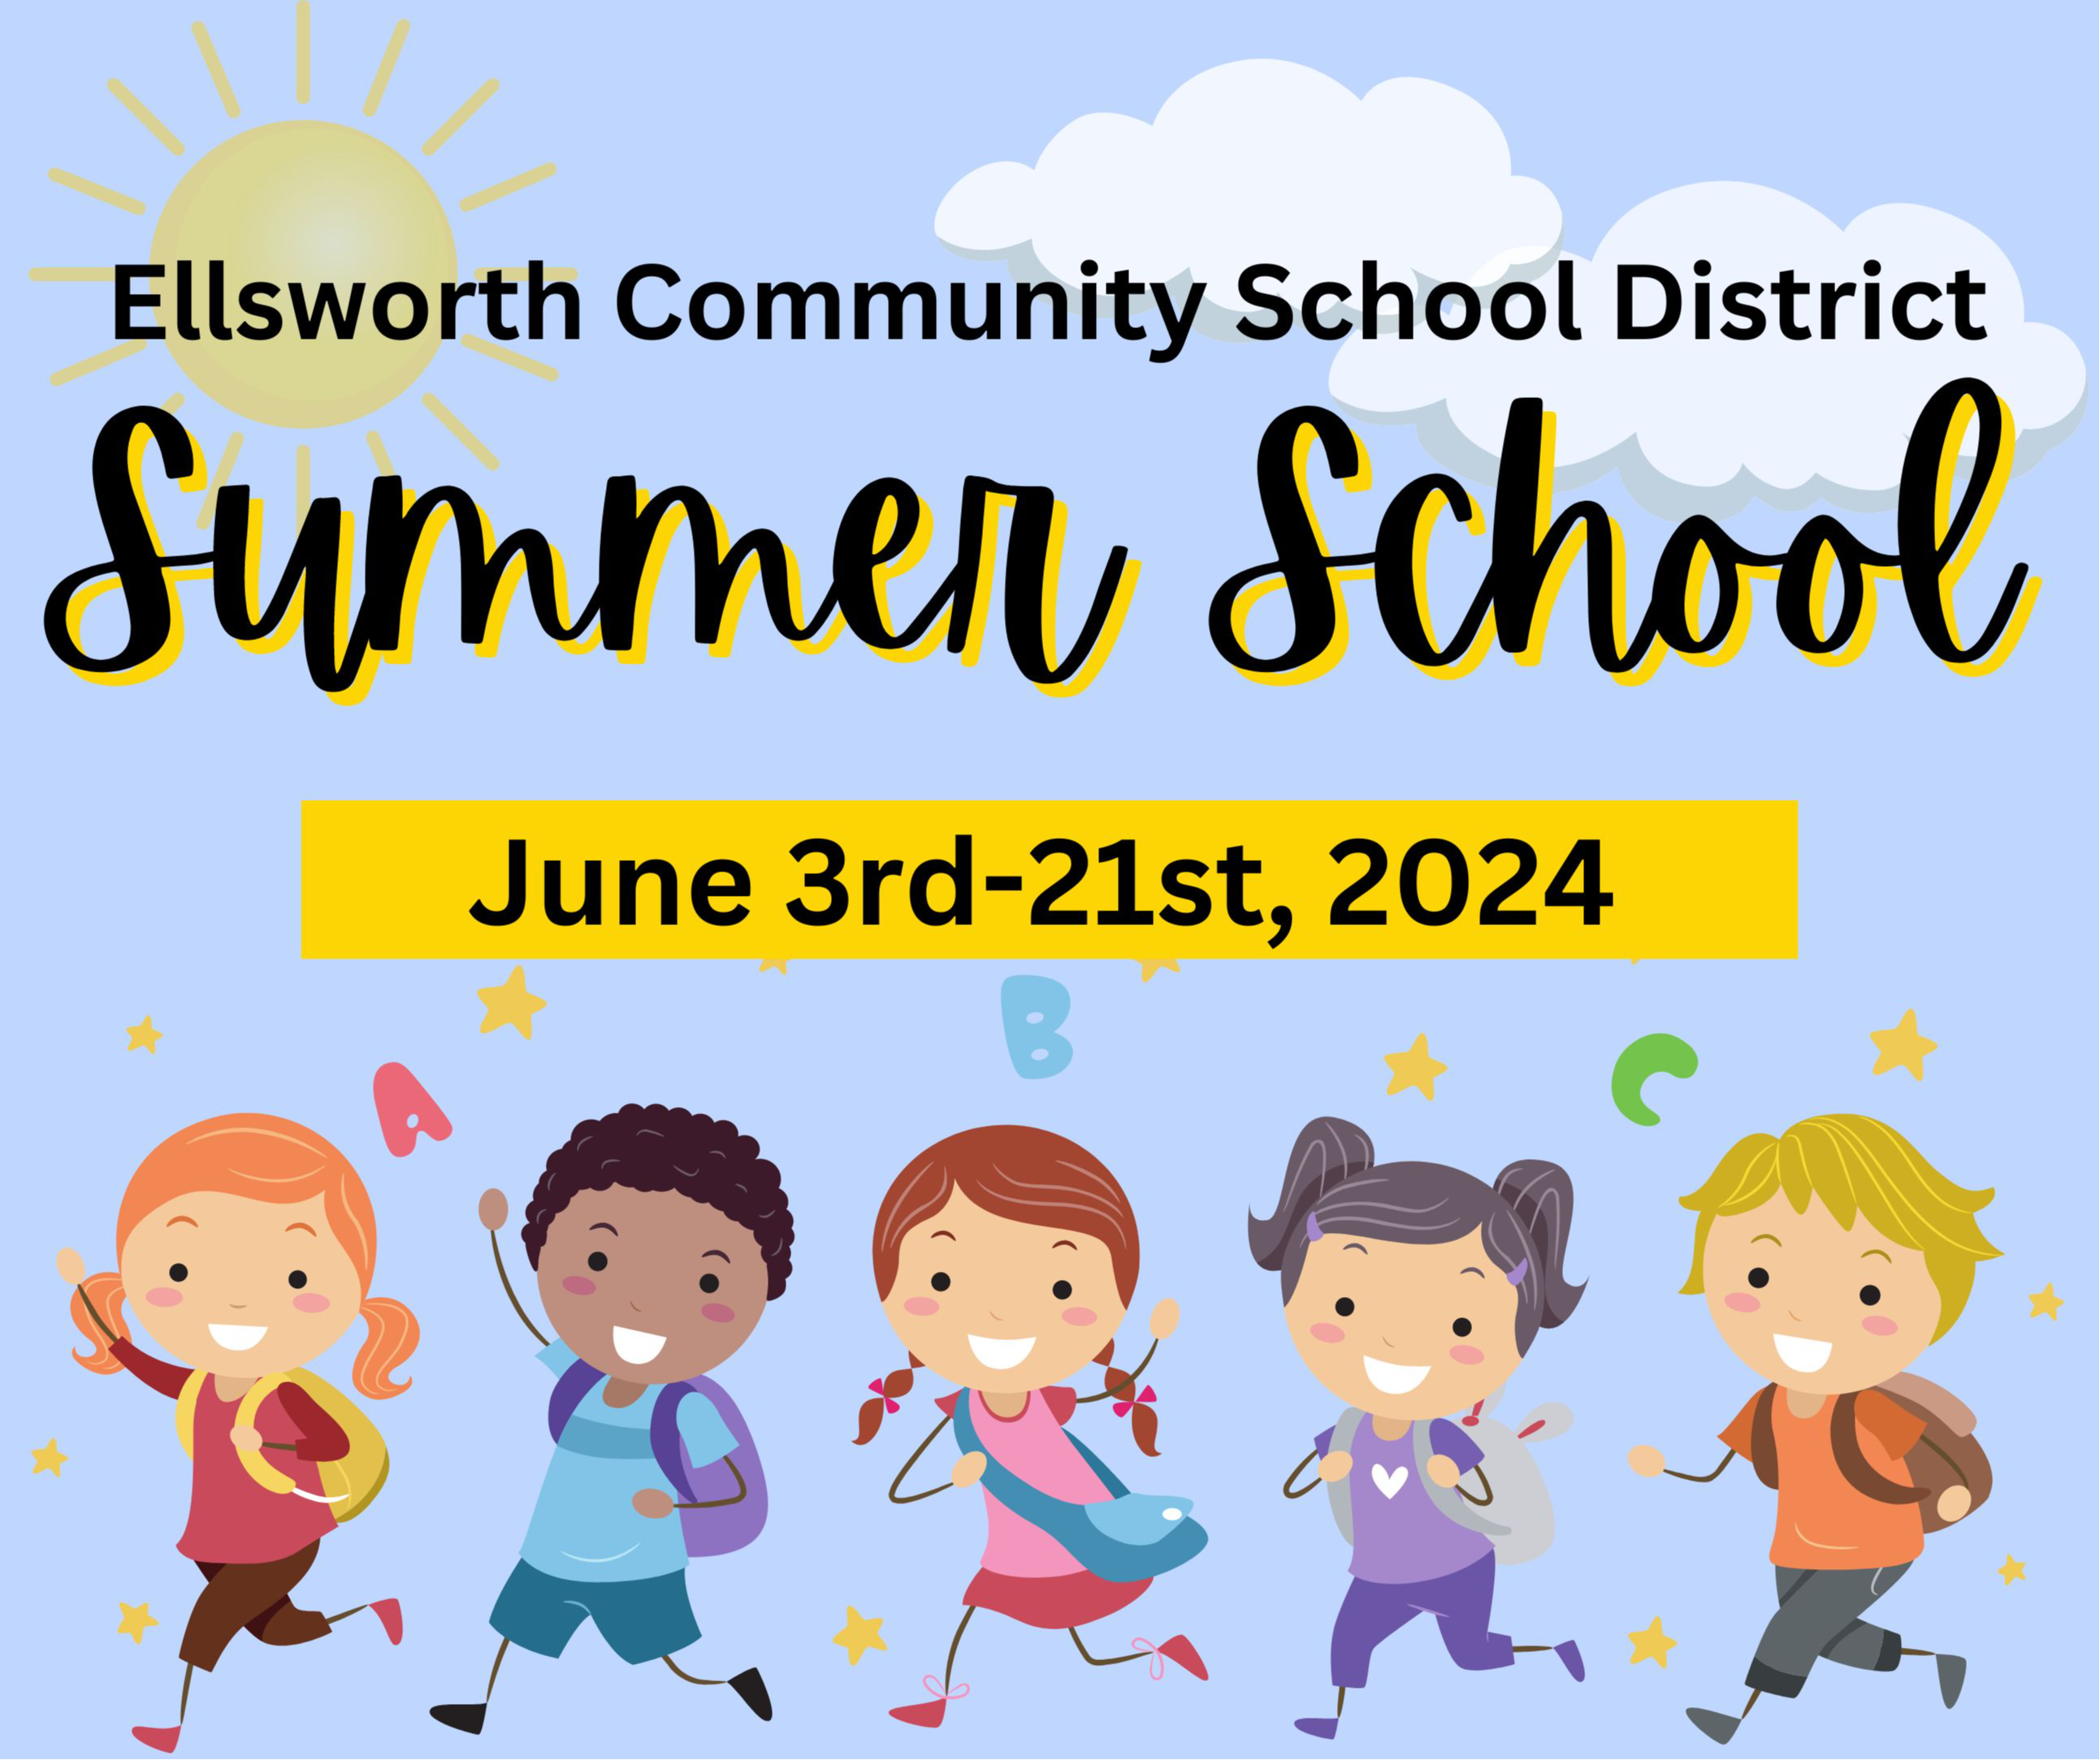 Summer School June 3rd-21st